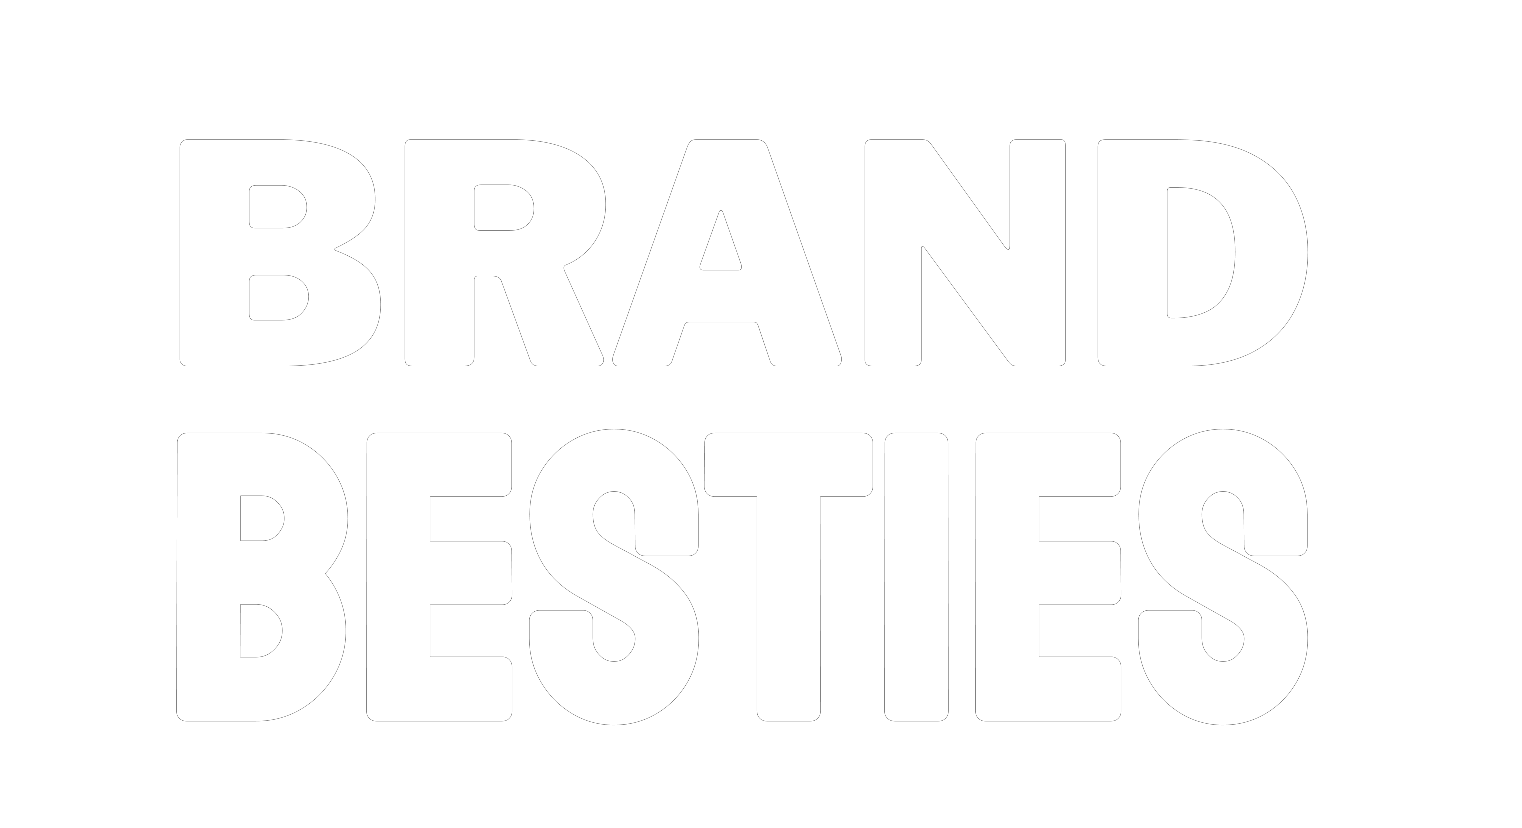 Brand Besties logo in white